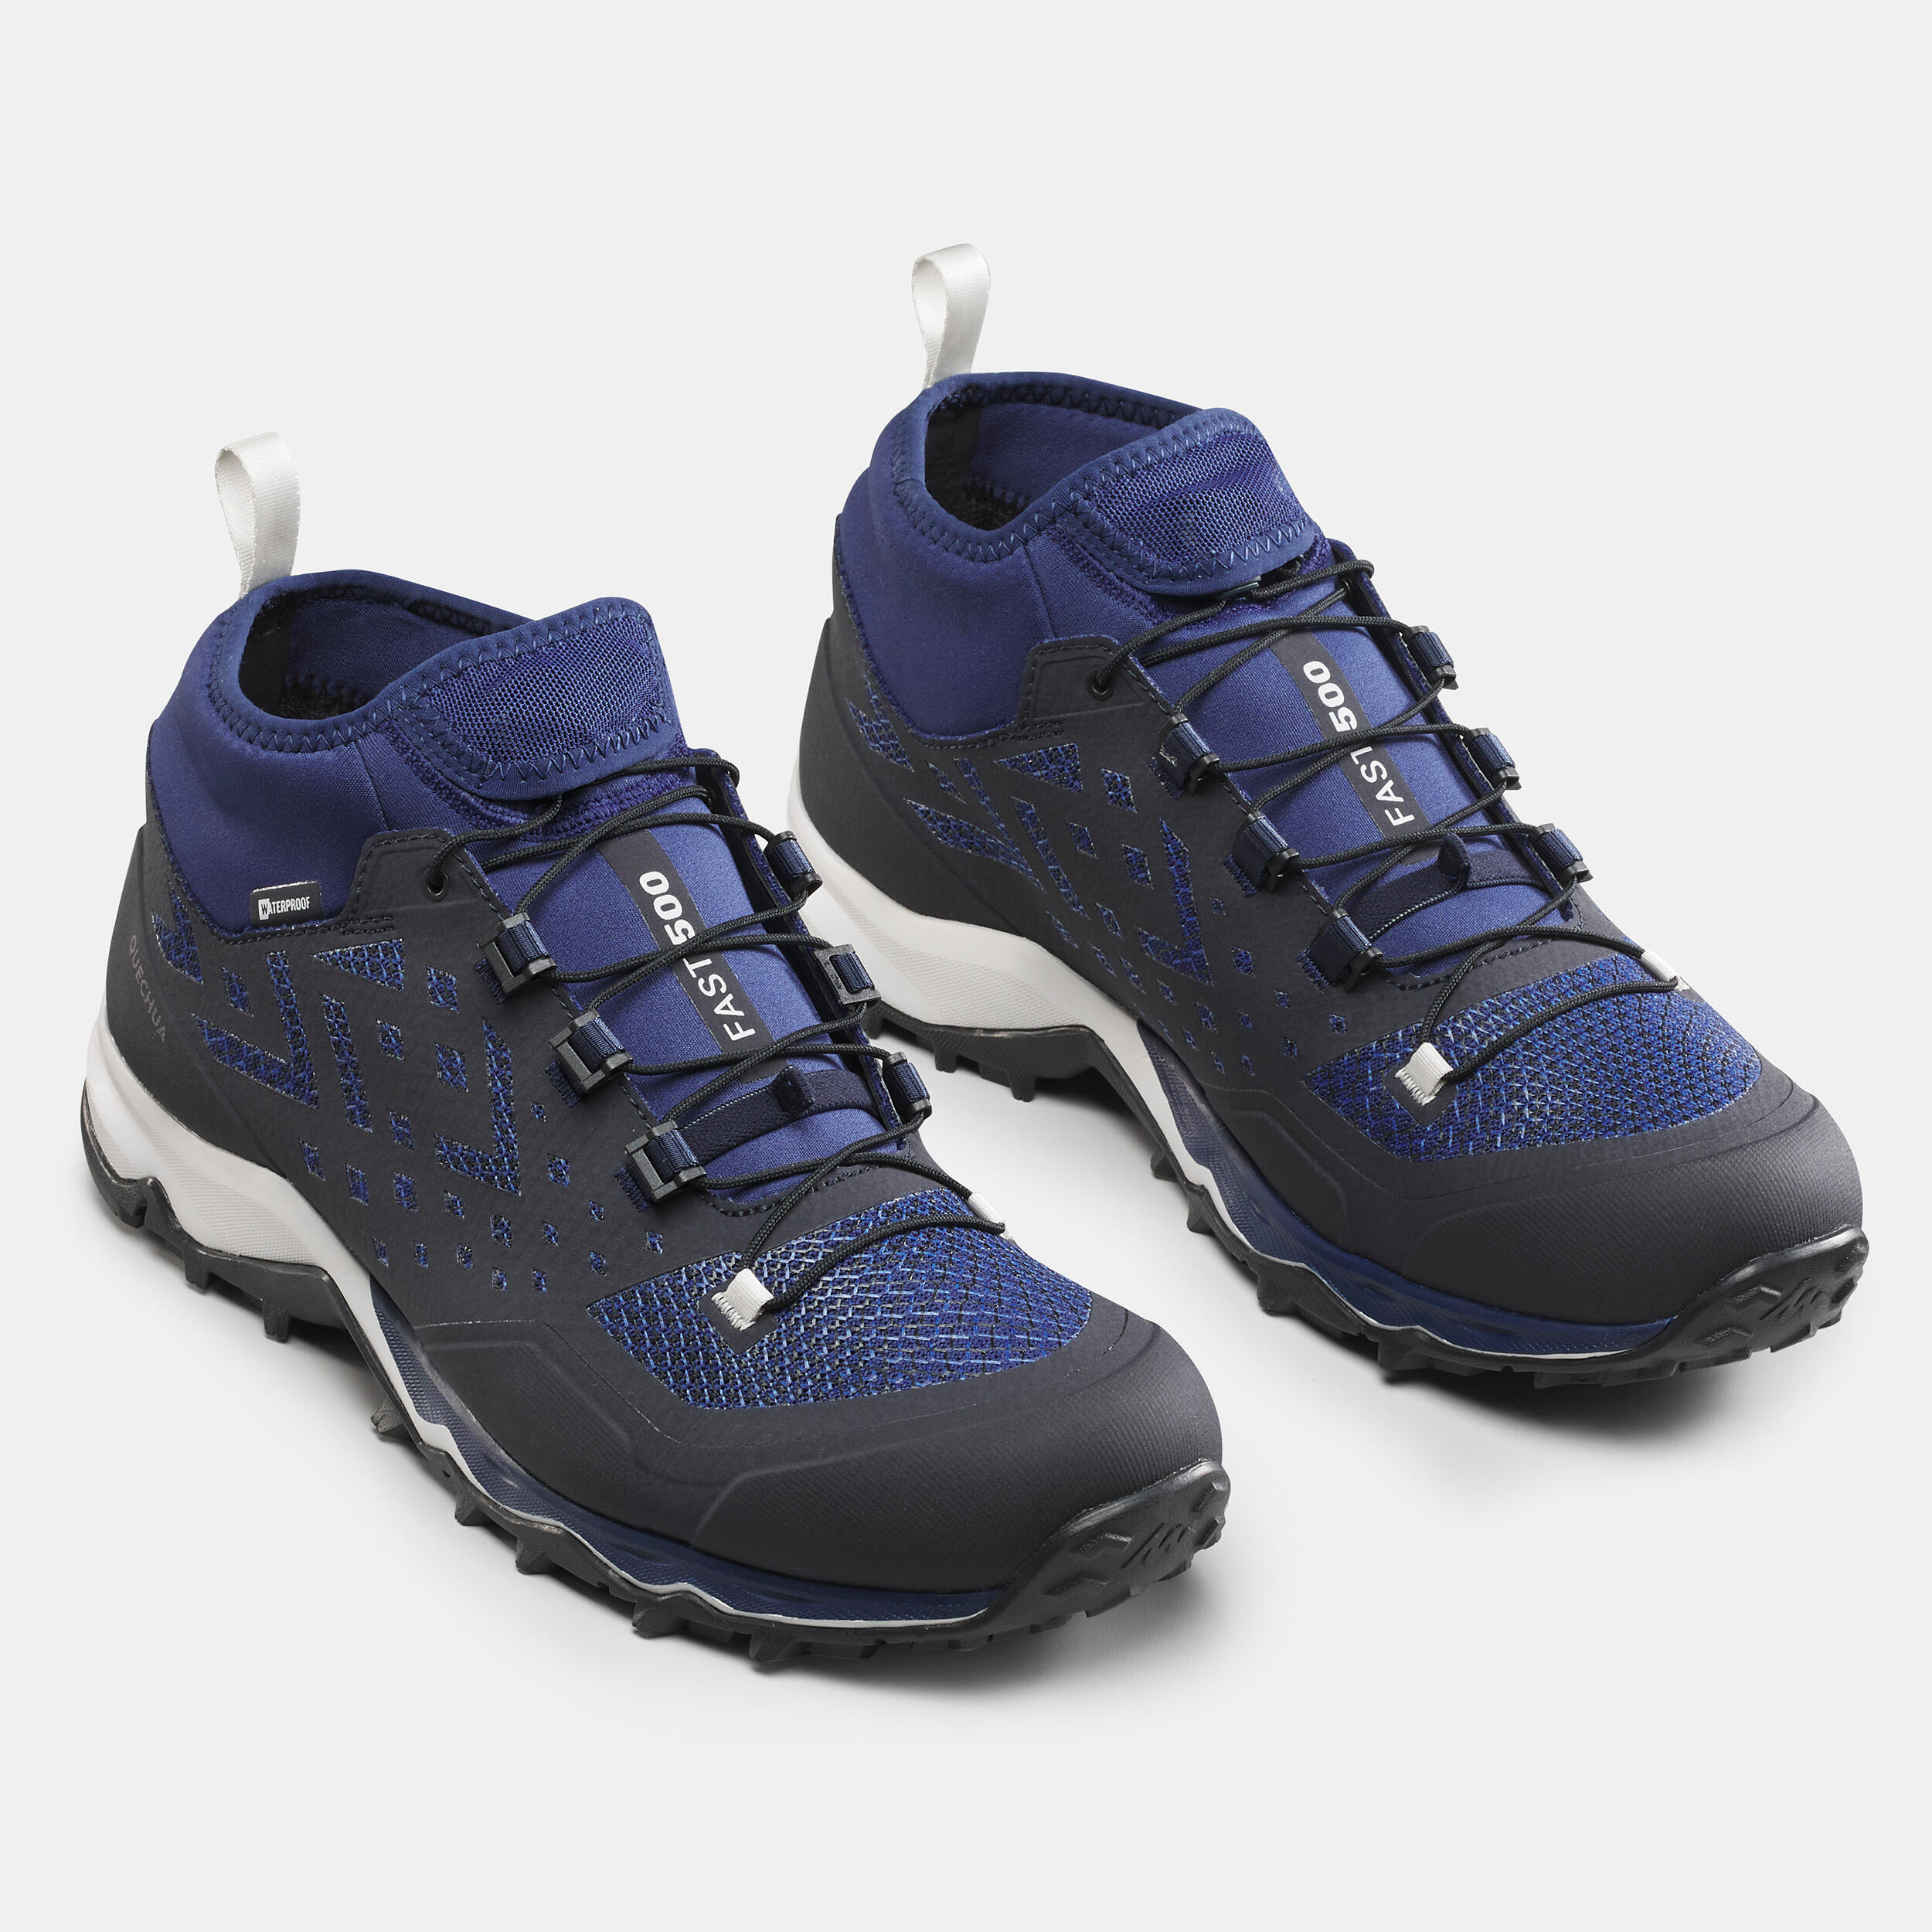 Men's Fast Hiking Ultra Lightweight Waterproof Boots - FH500 4/6